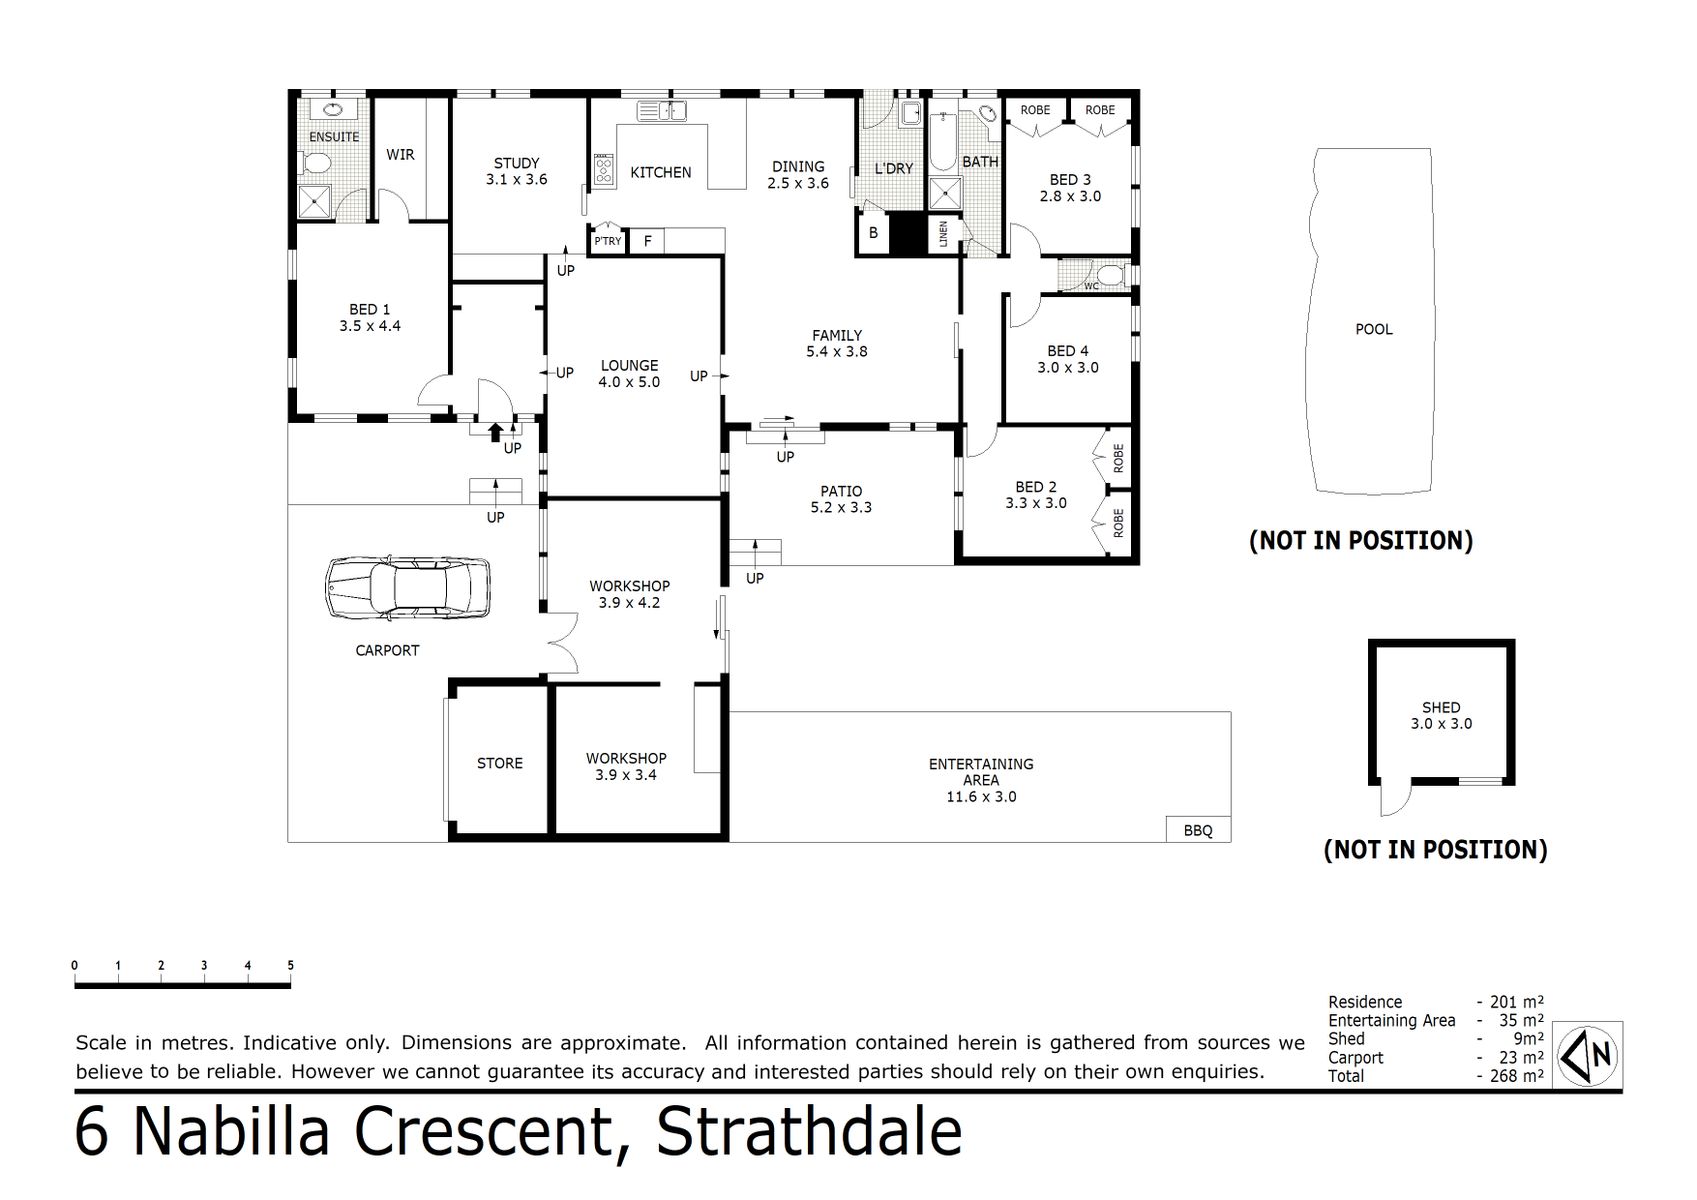 6 Nabilla Crescent Strathdale (27 MAY 2021) 201sqm